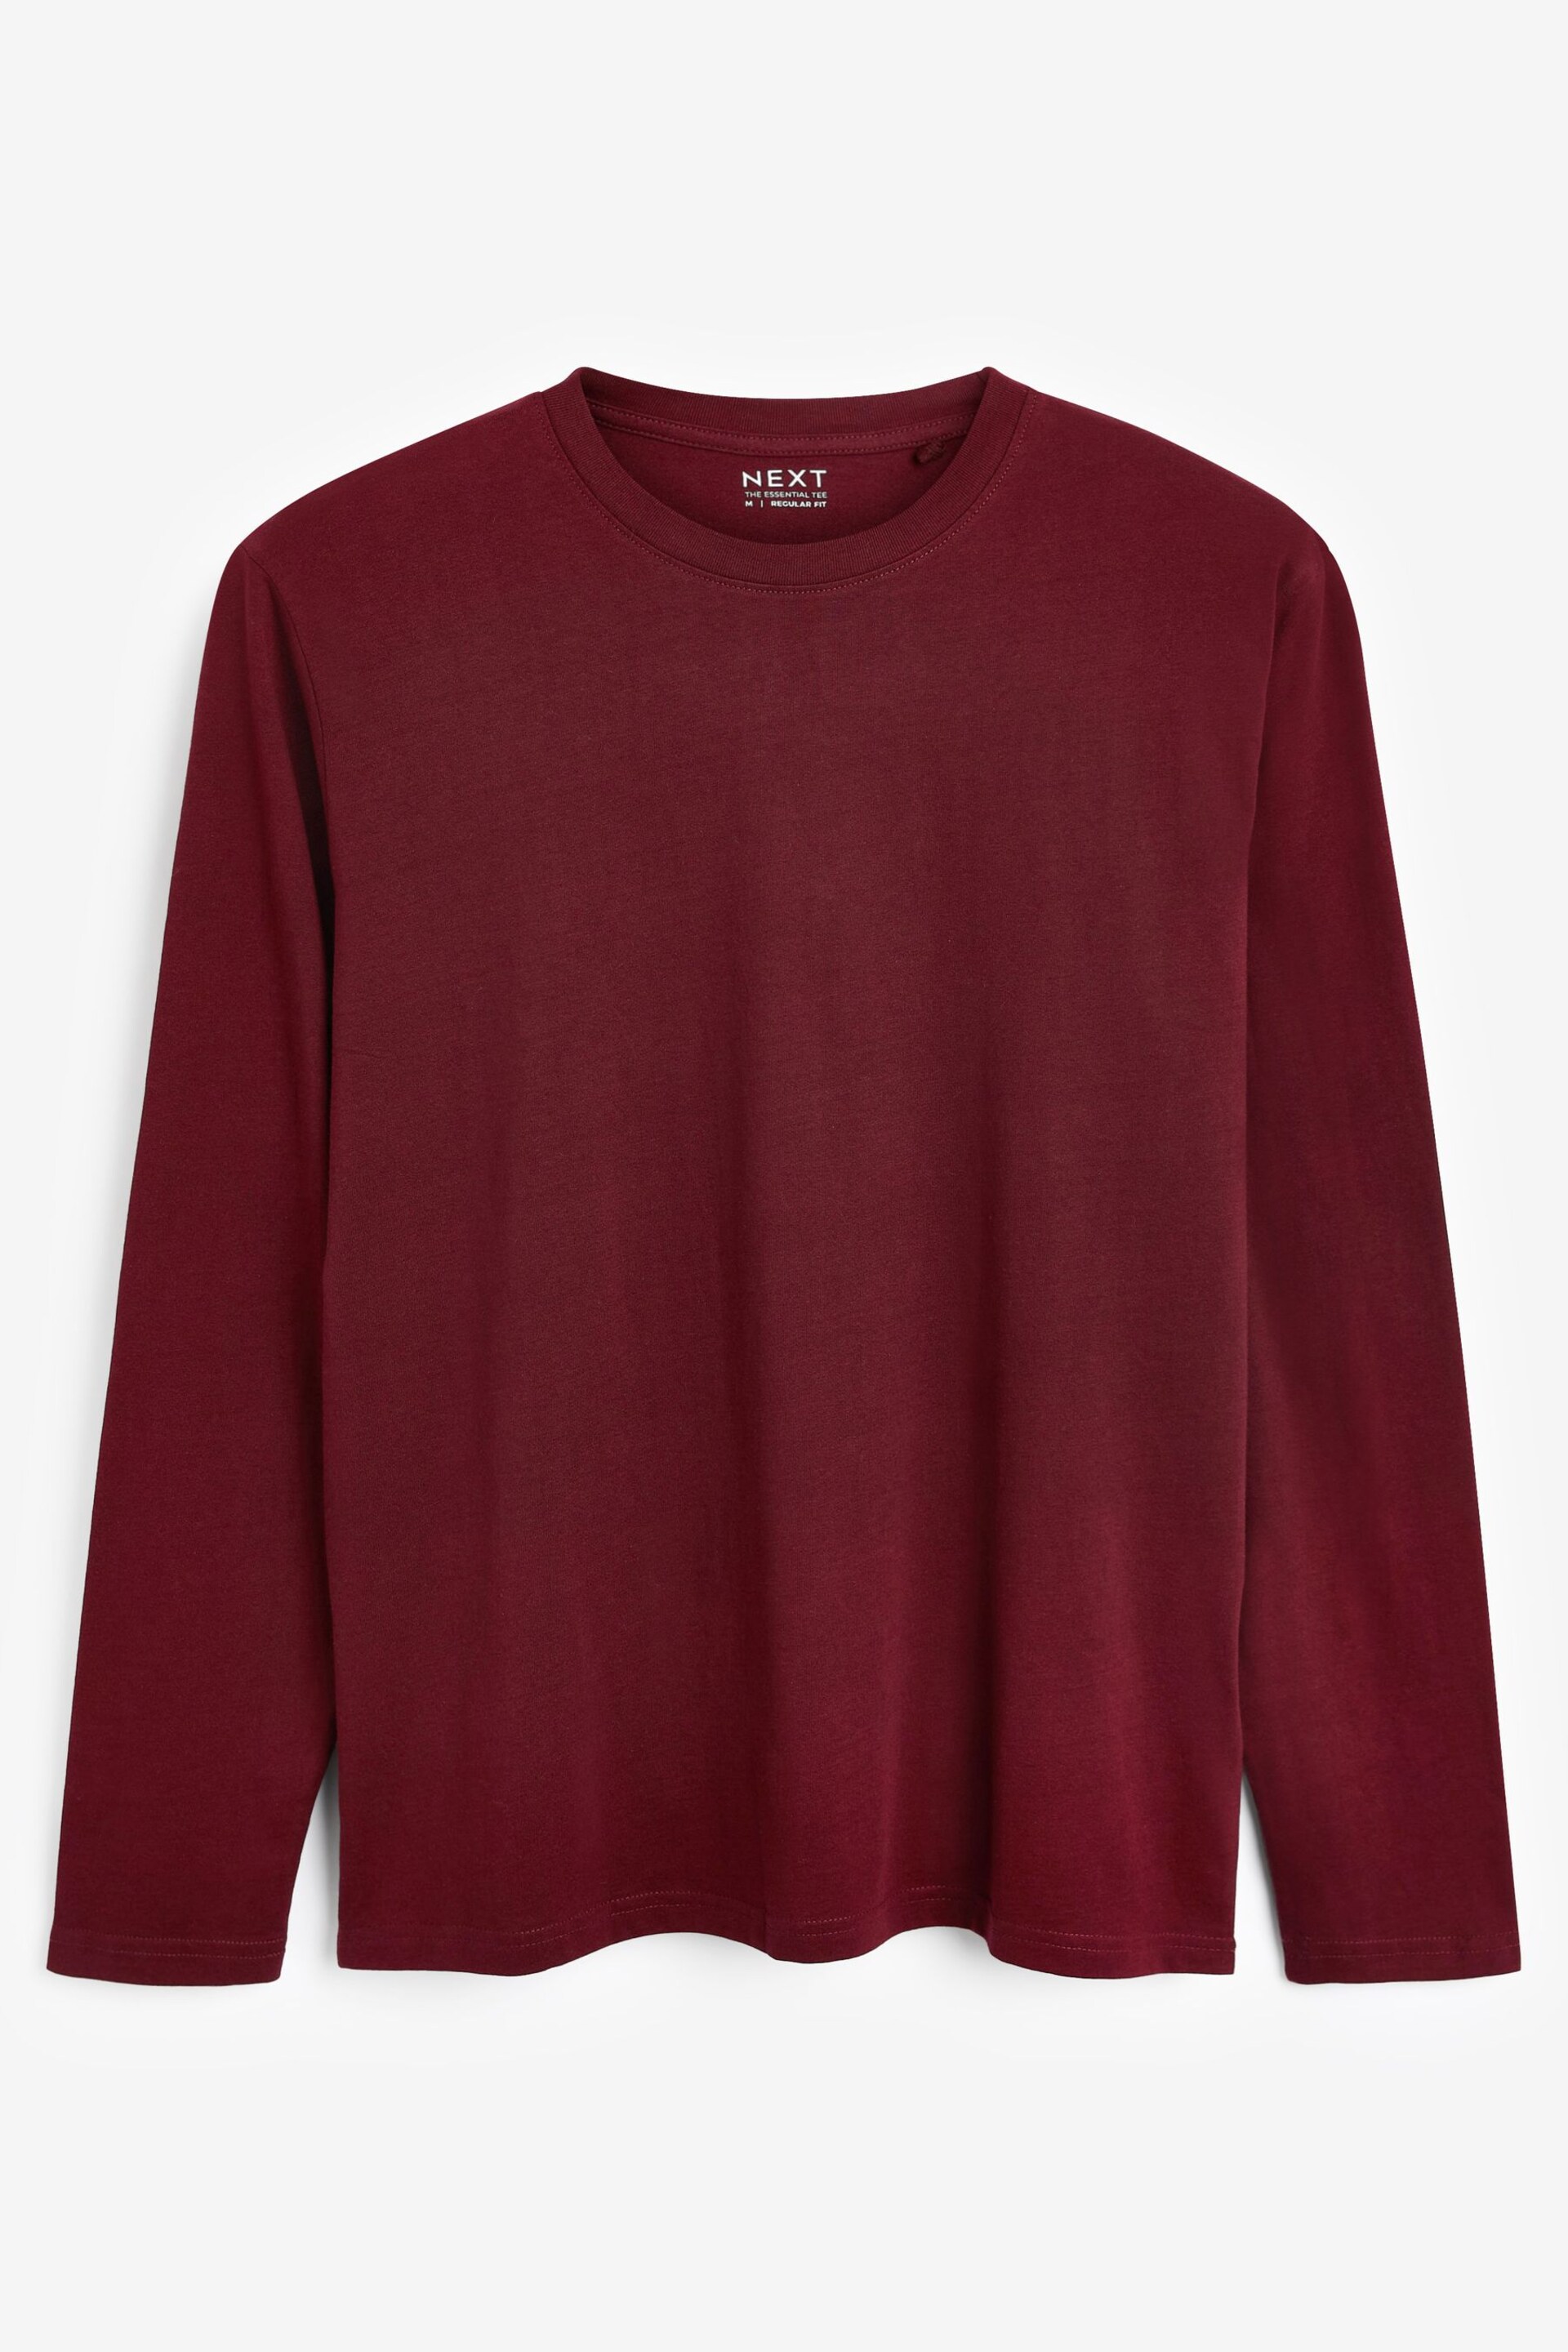 Burgundy Red Regular Fit Long Sleeve Crew Neck T-Shirt - Image 4 of 4